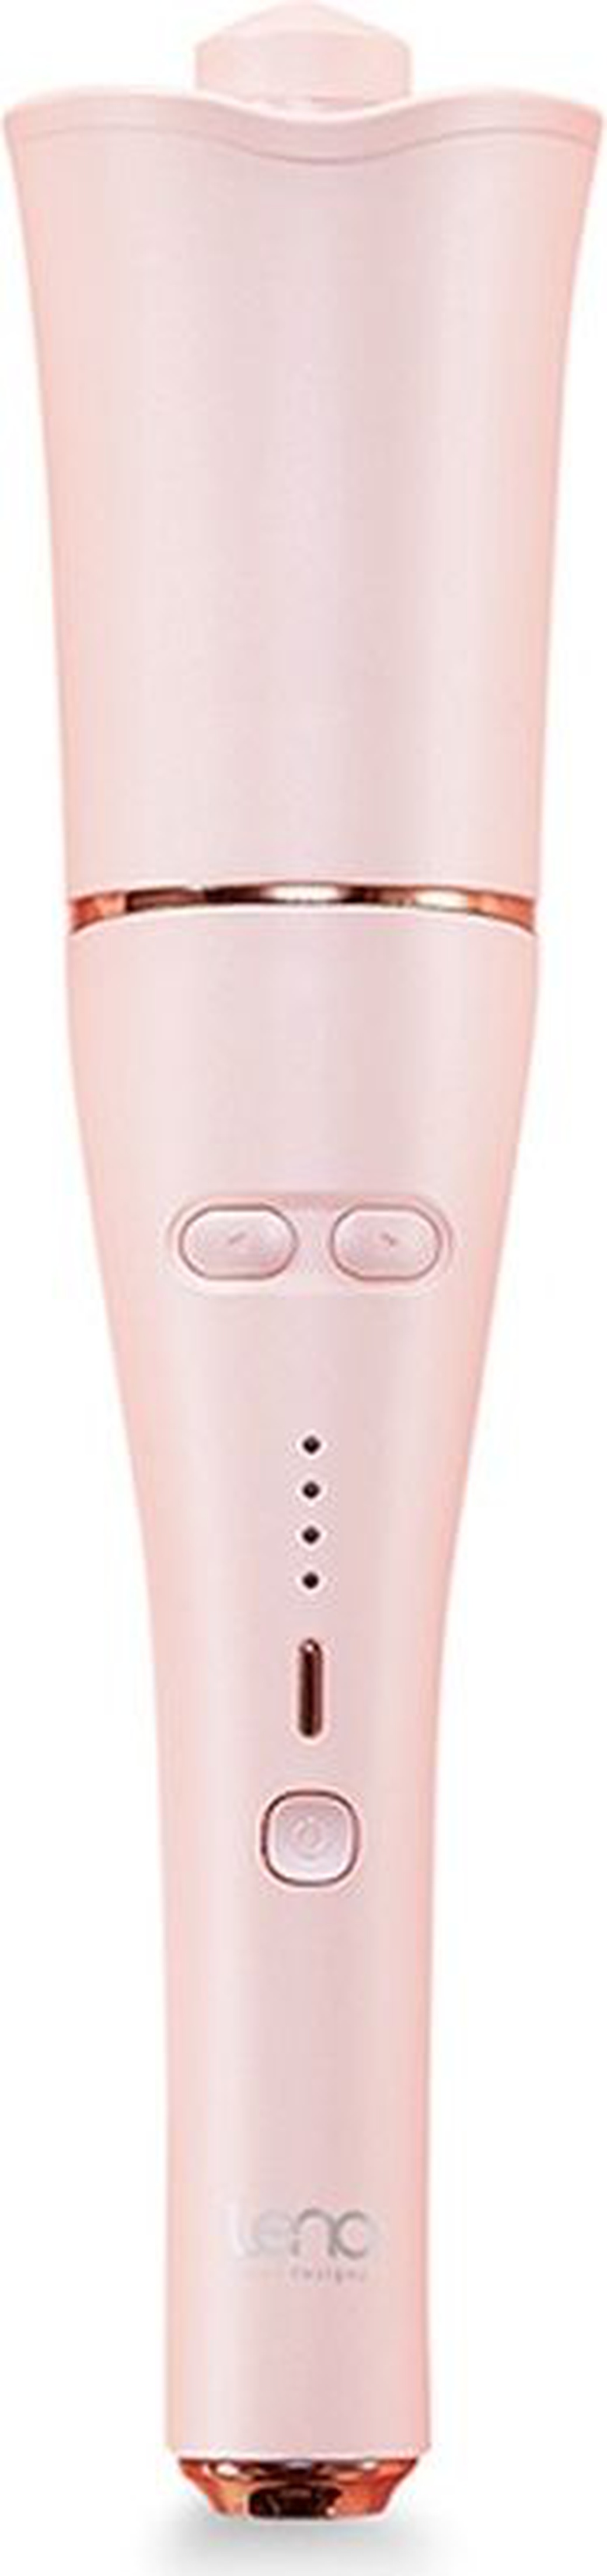 Автоматический стайлер для волос Lena Automatic Curling Wand Z1, розовый фото